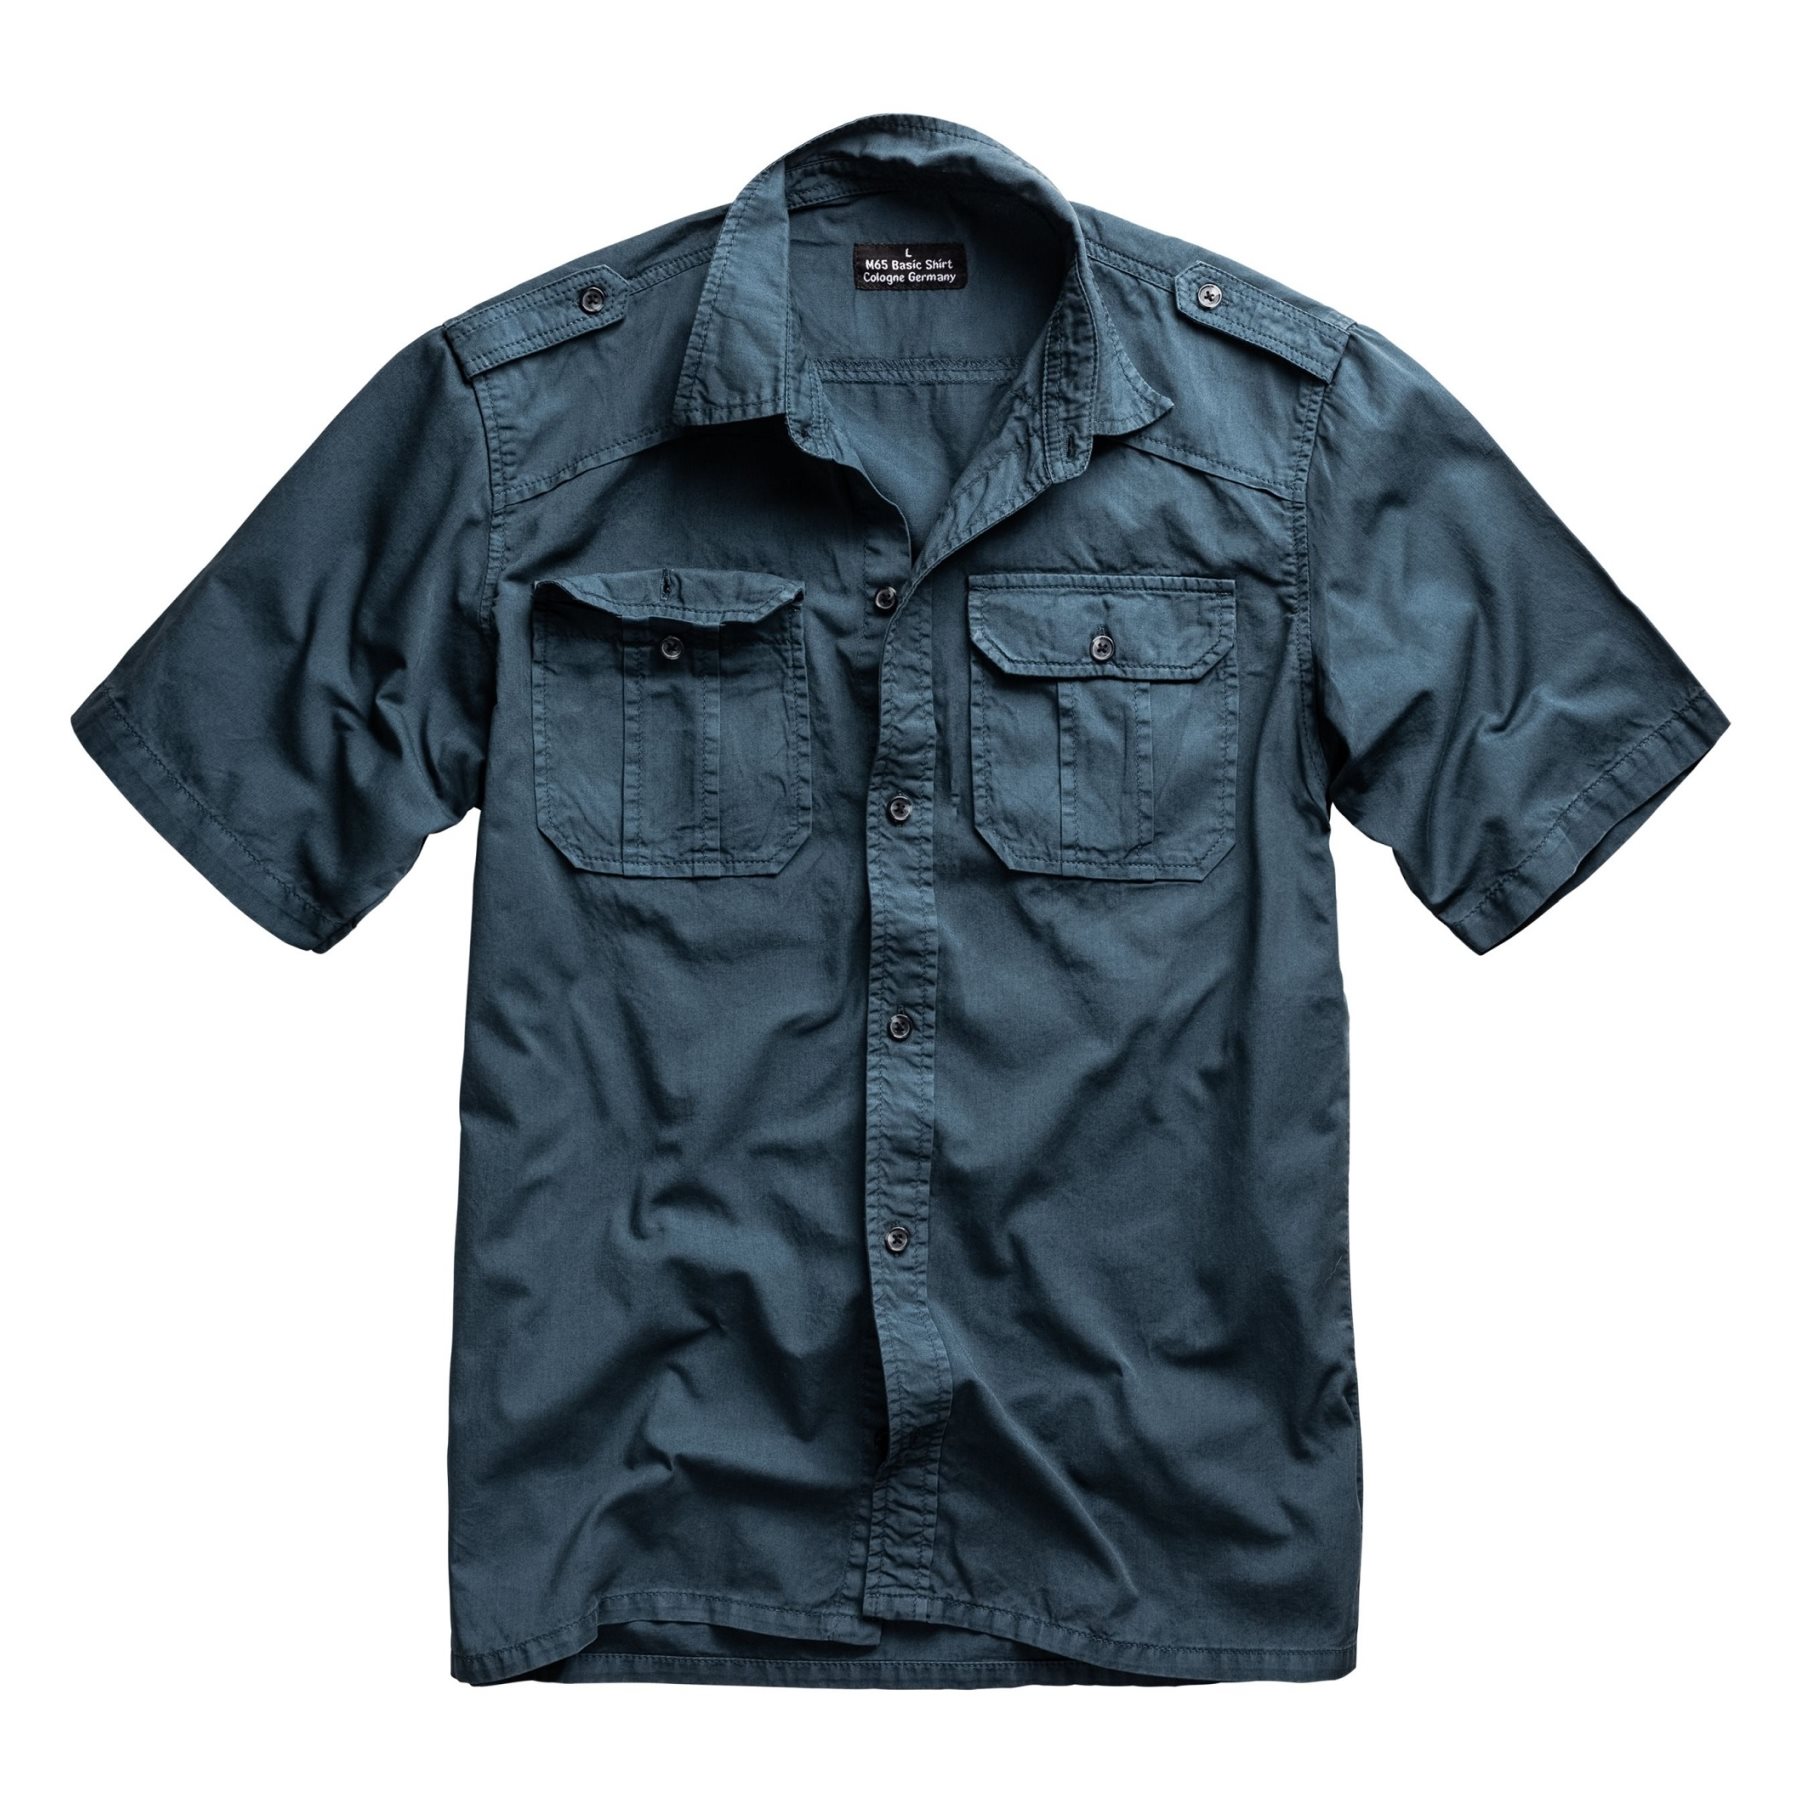 M65 BASIC shirt with short sleeves BLUE SURPLUS 06-3592-10 L-11